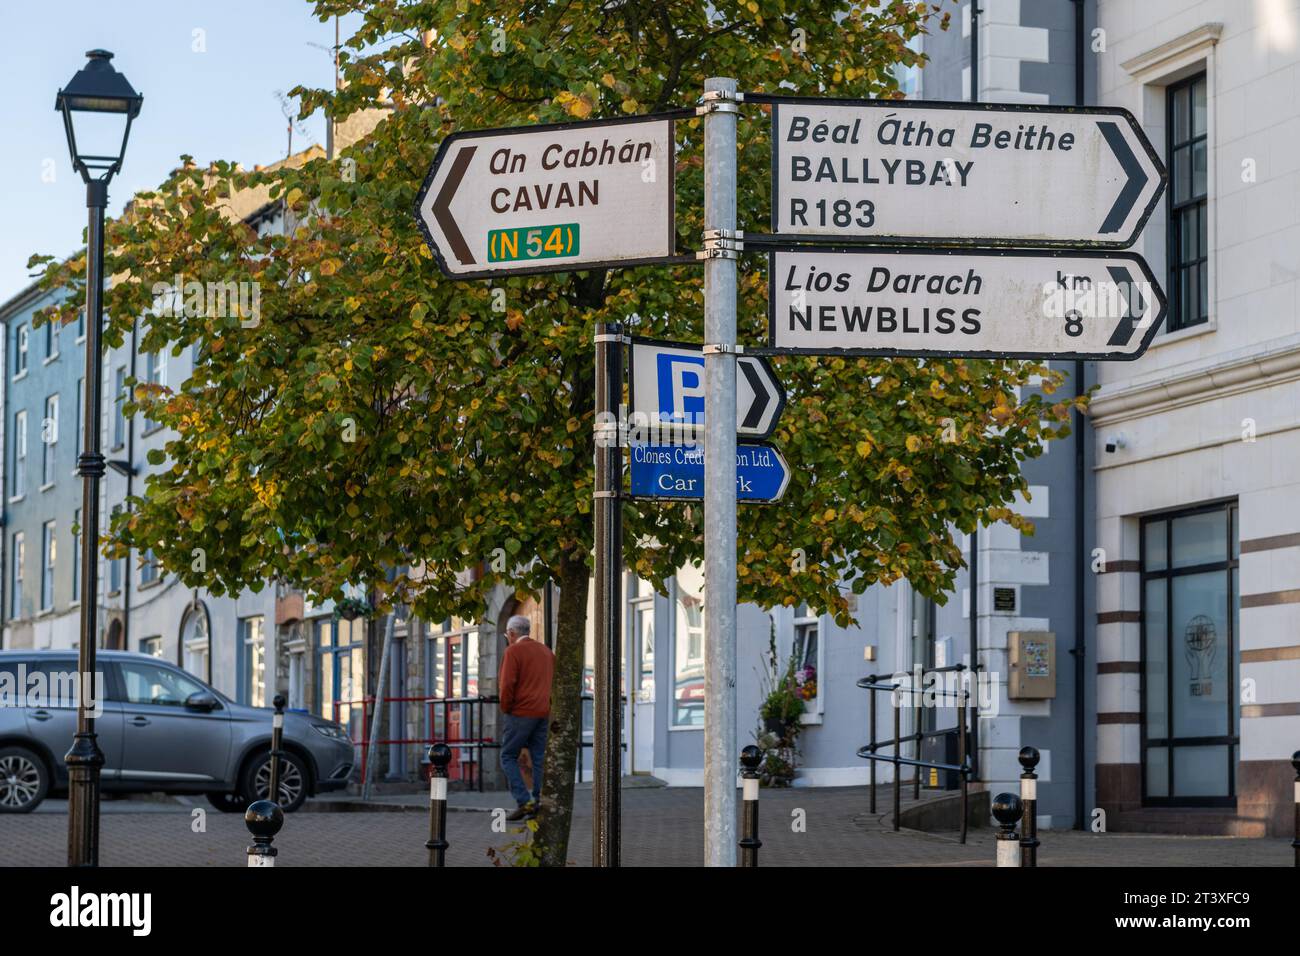 Cavan, Ballybay and Newbliss signpost in Clones, Co. Monaghan, Ireland. Stock Photo